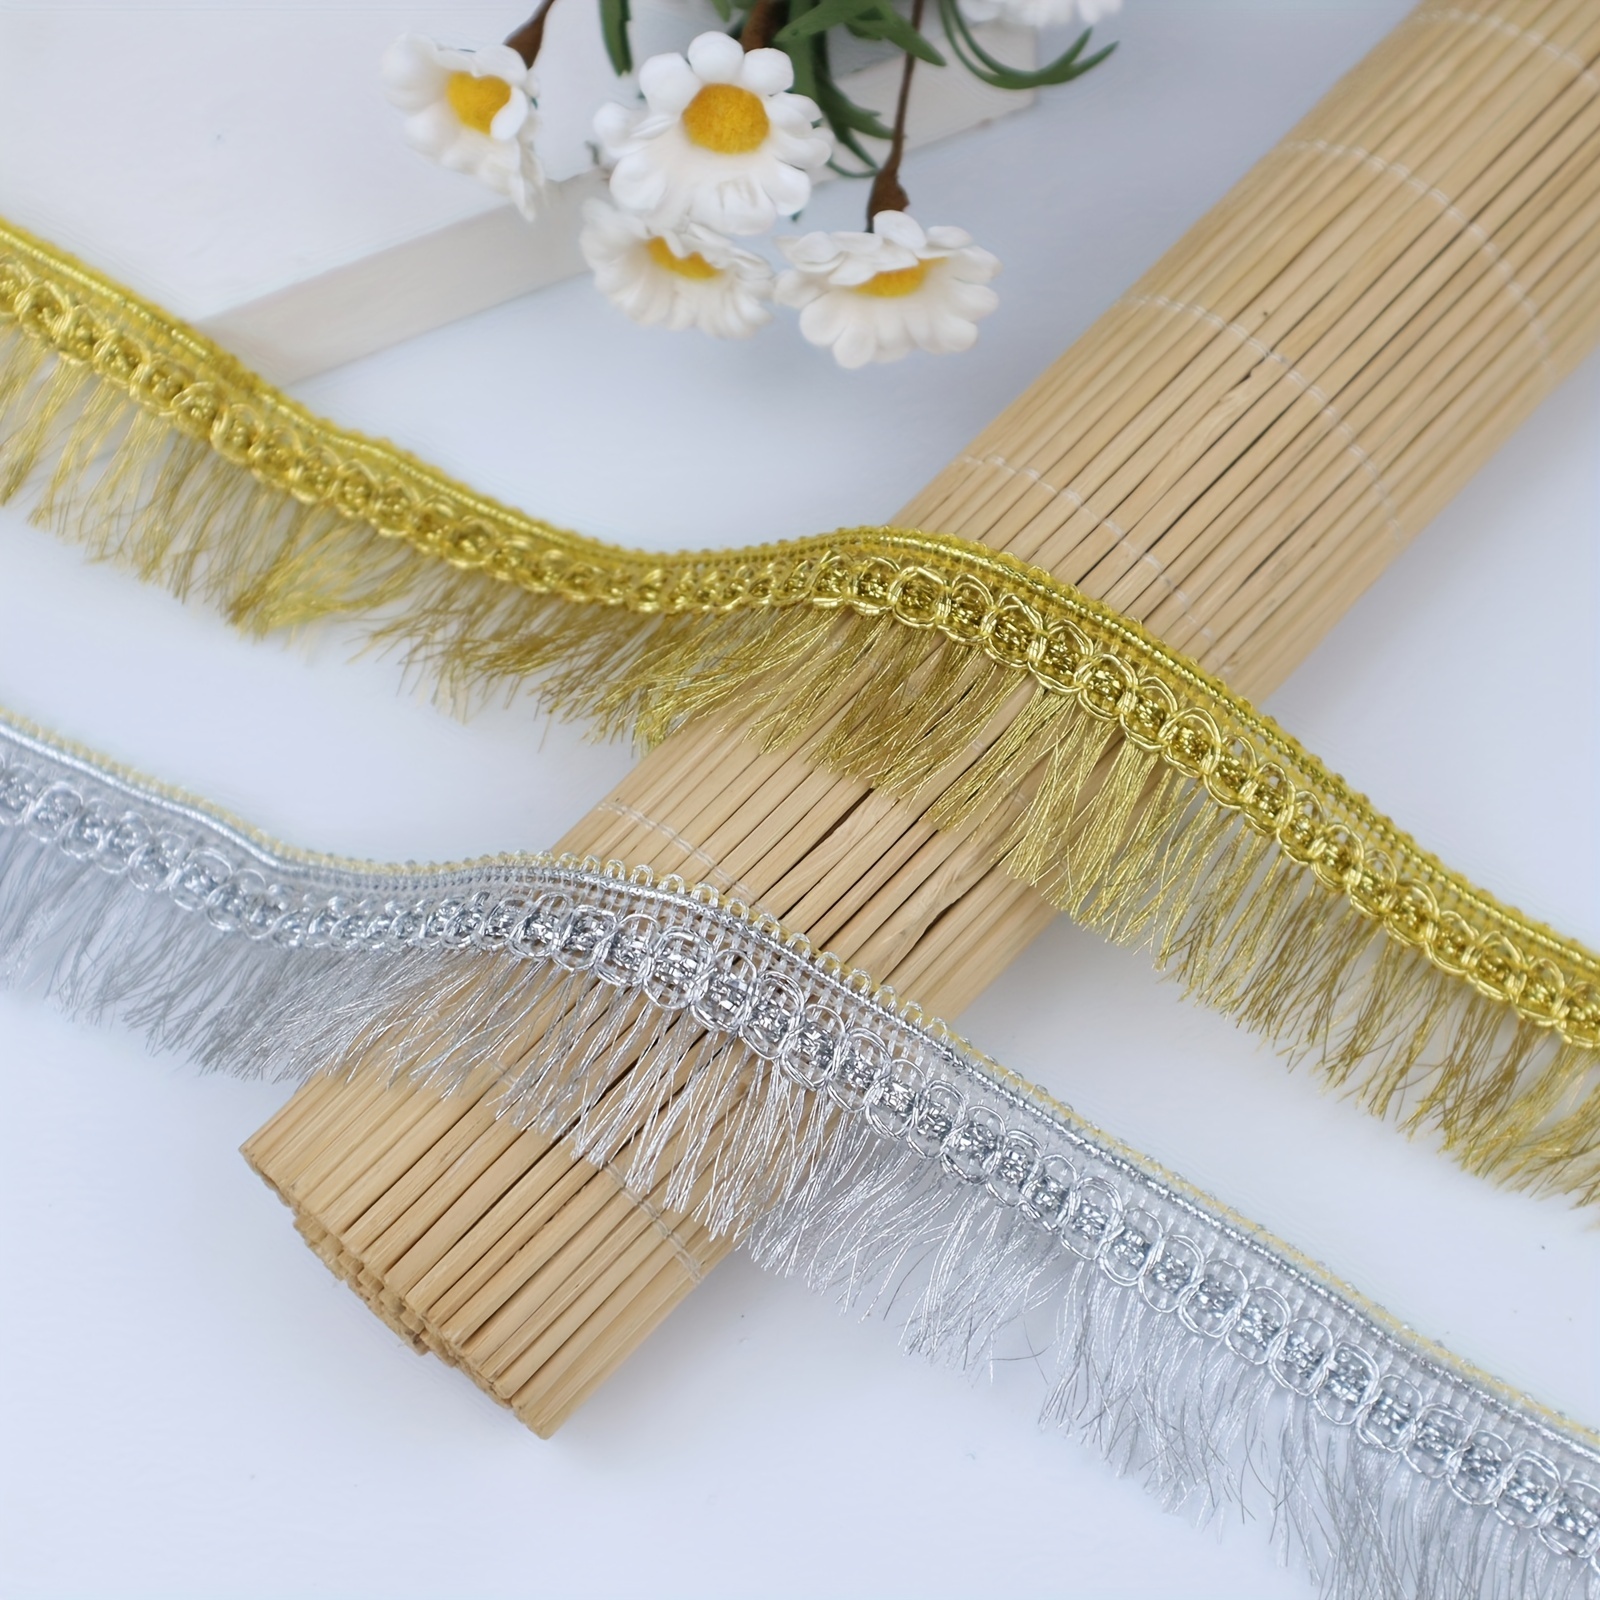  Flecos de encaje con borlas de poliéster con ribete de encaje,  falda de baile latino, cortina con flecos para coser (1 x 2) : Arte y  Manualidades